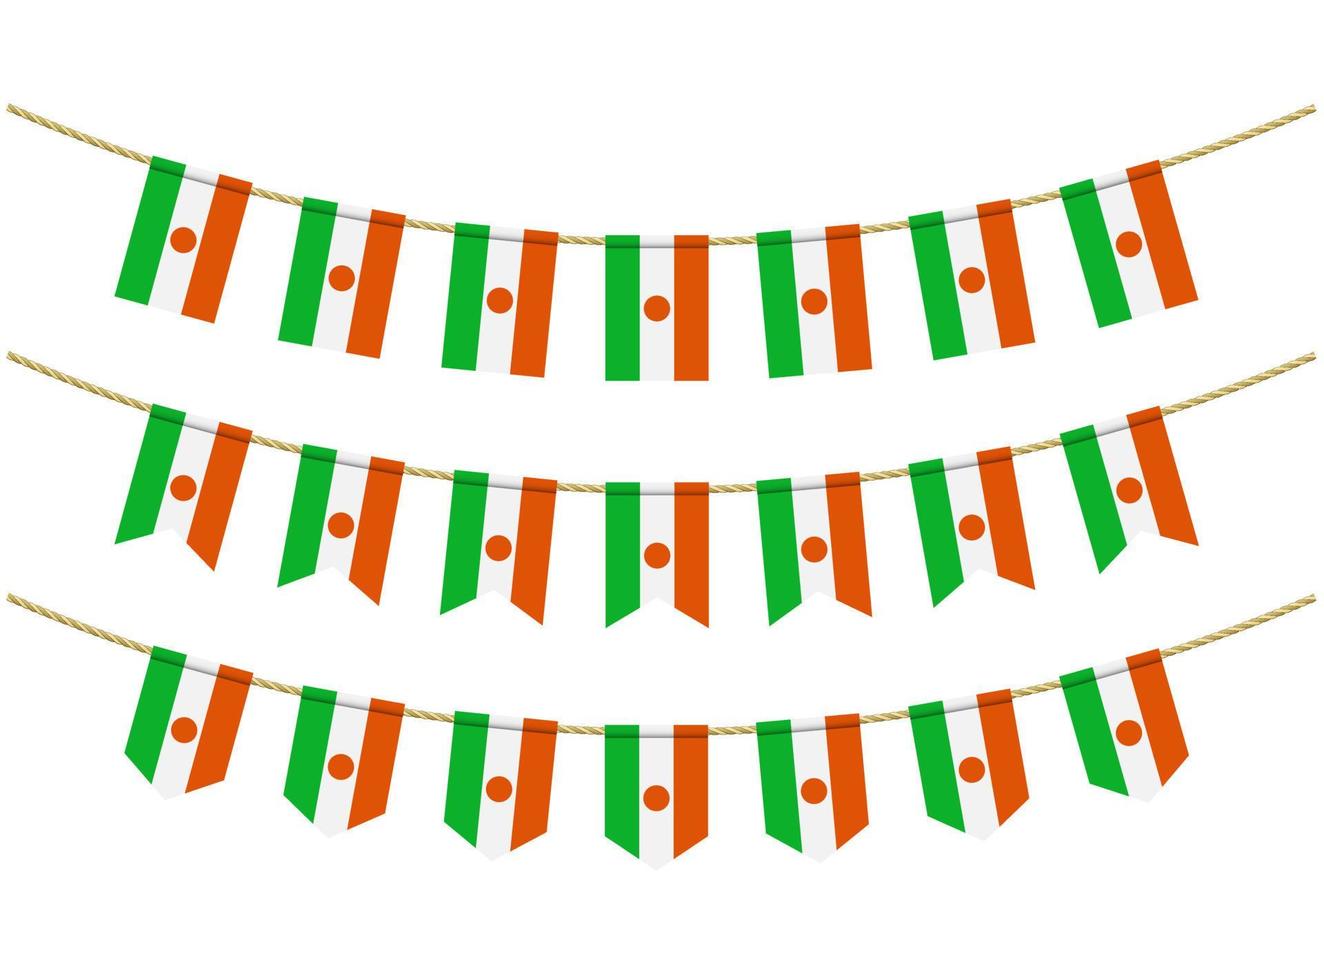 bandeira do niger nas cordas em fundo branco. conjunto de bandeiras de estamenha patriótica. decoração de estamenha da bandeira do niger vetor